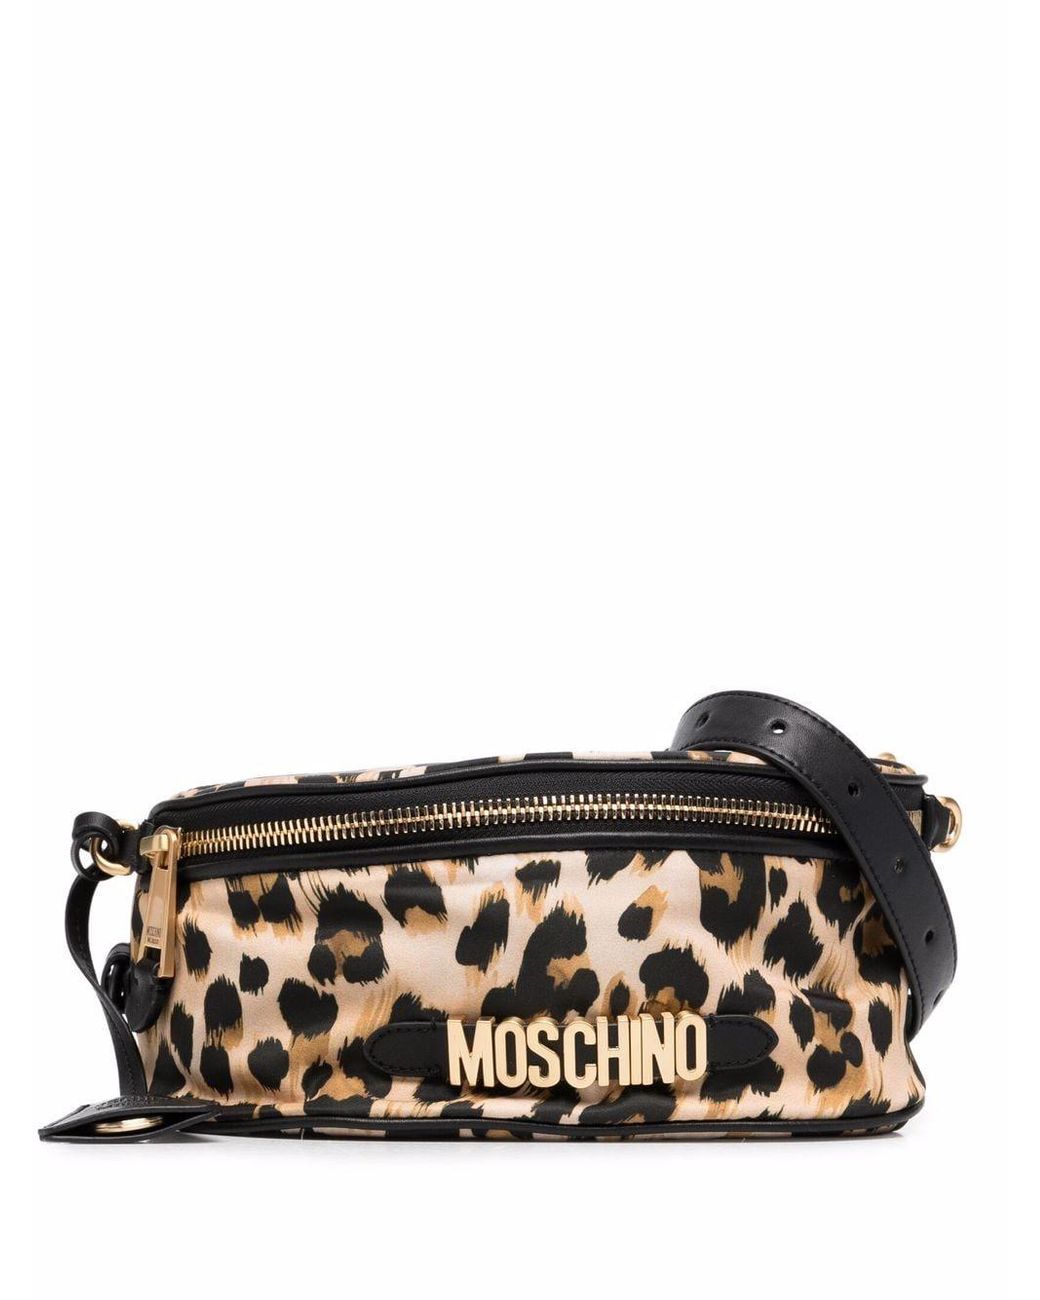 Moschino Leopard-print Belt Bag in Black | Lyst